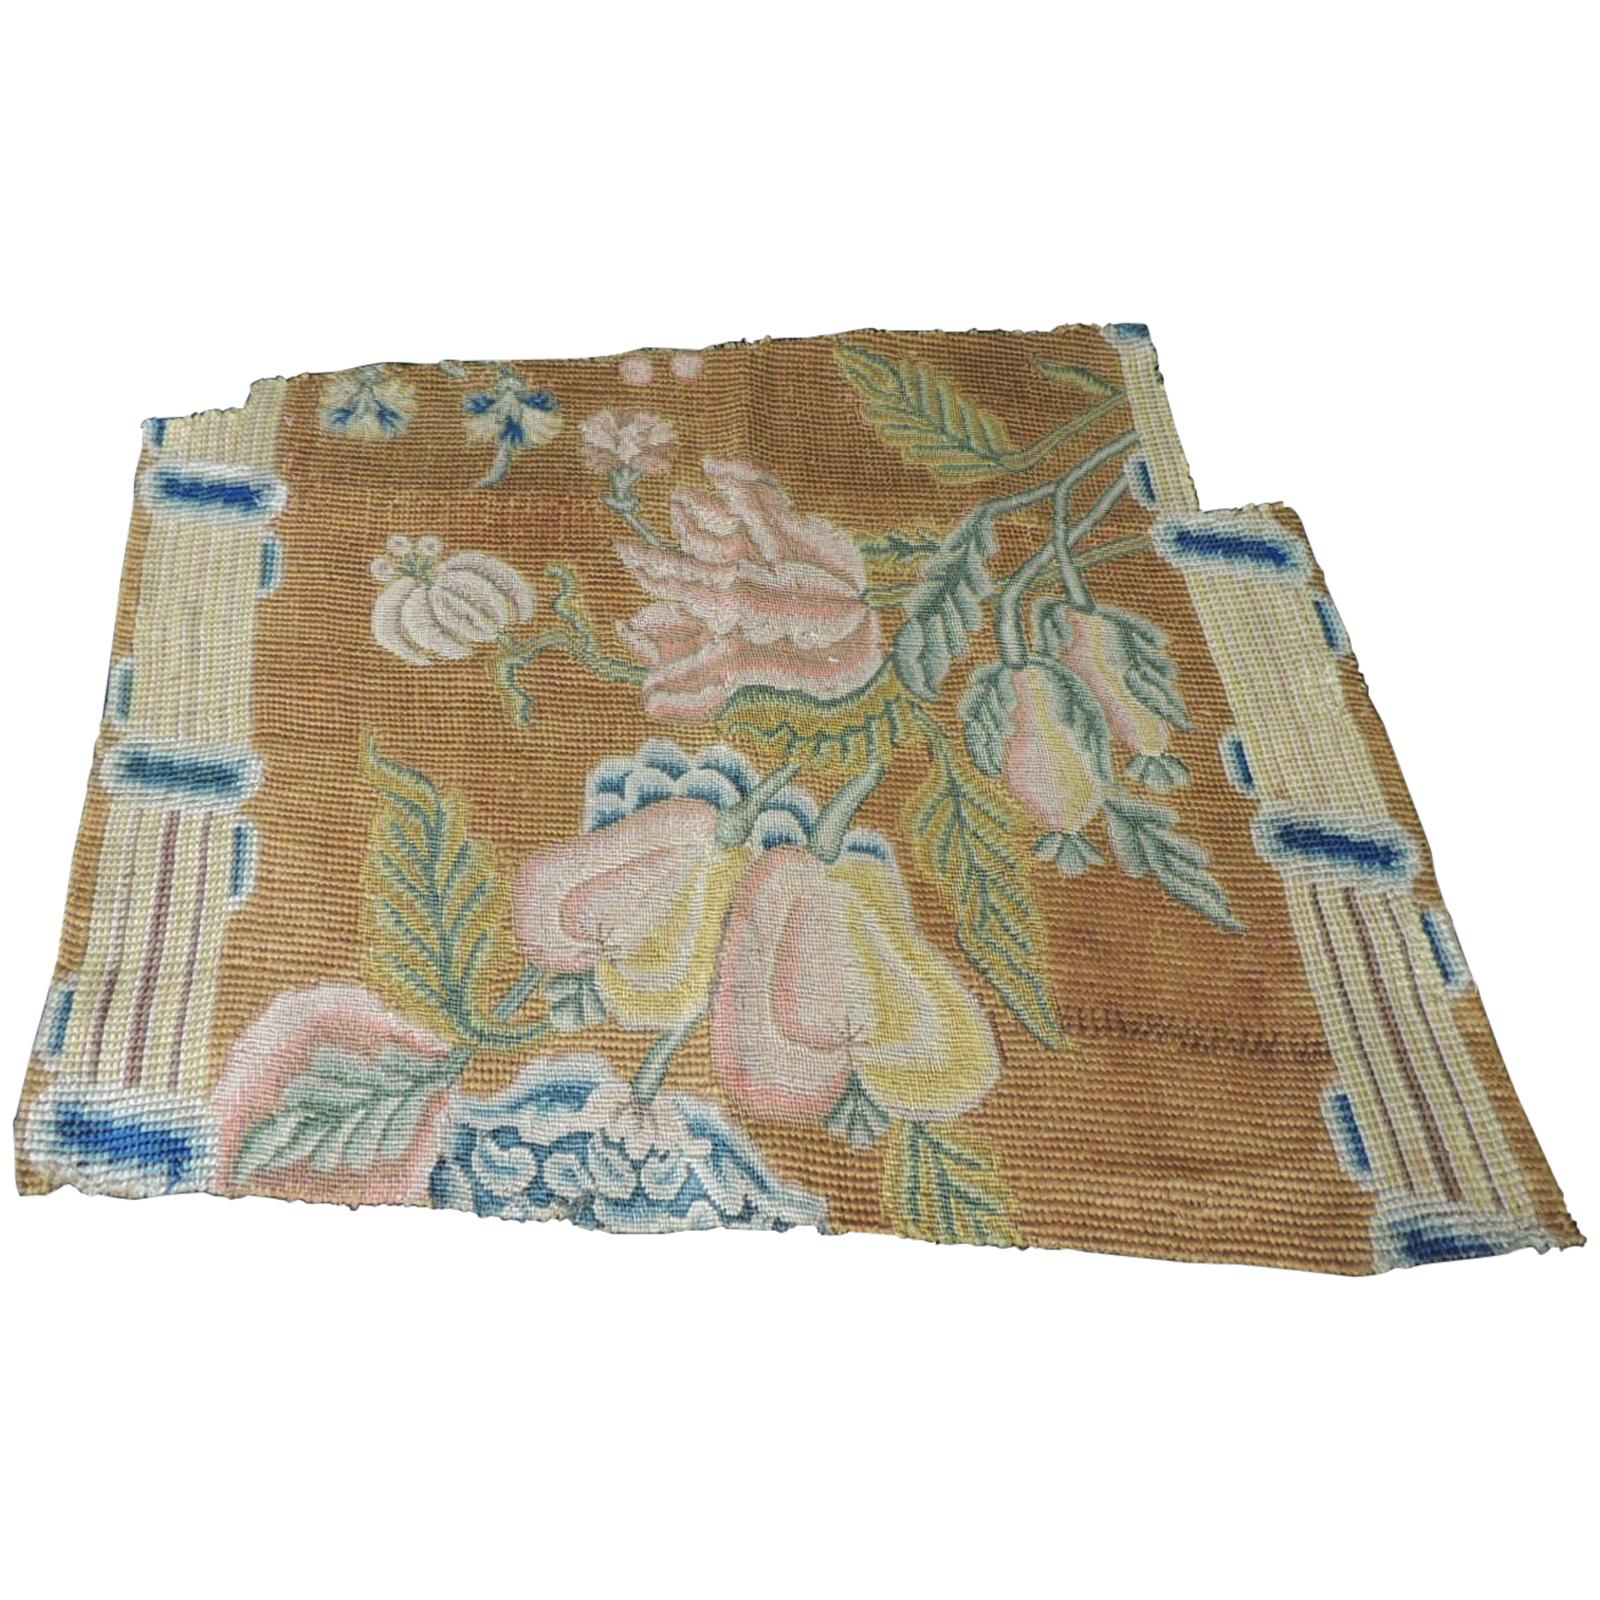 Antique Floral Needlework Tapestry Fragment For Sale